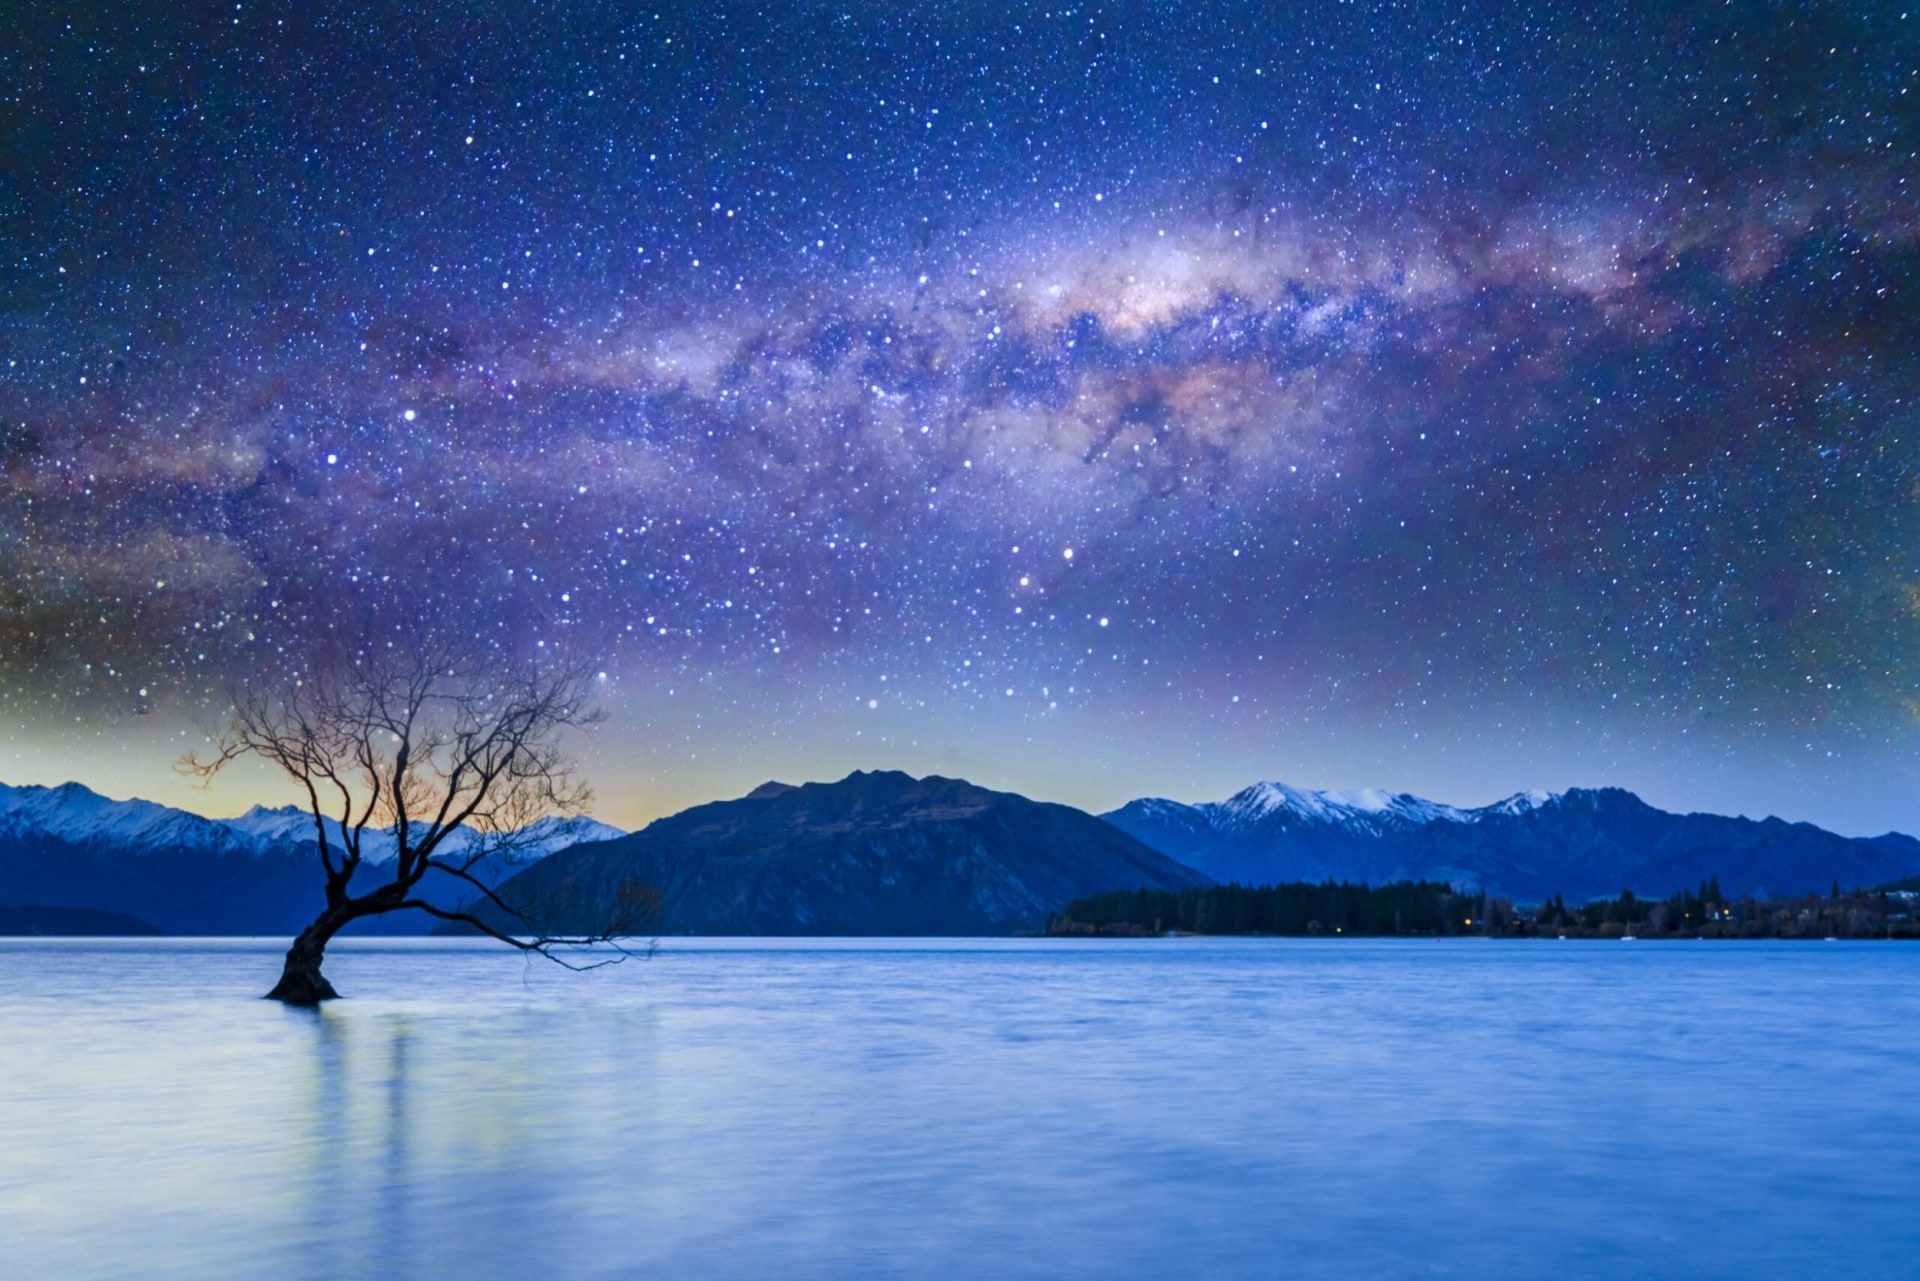 Lake Wanaka at night with starry skies